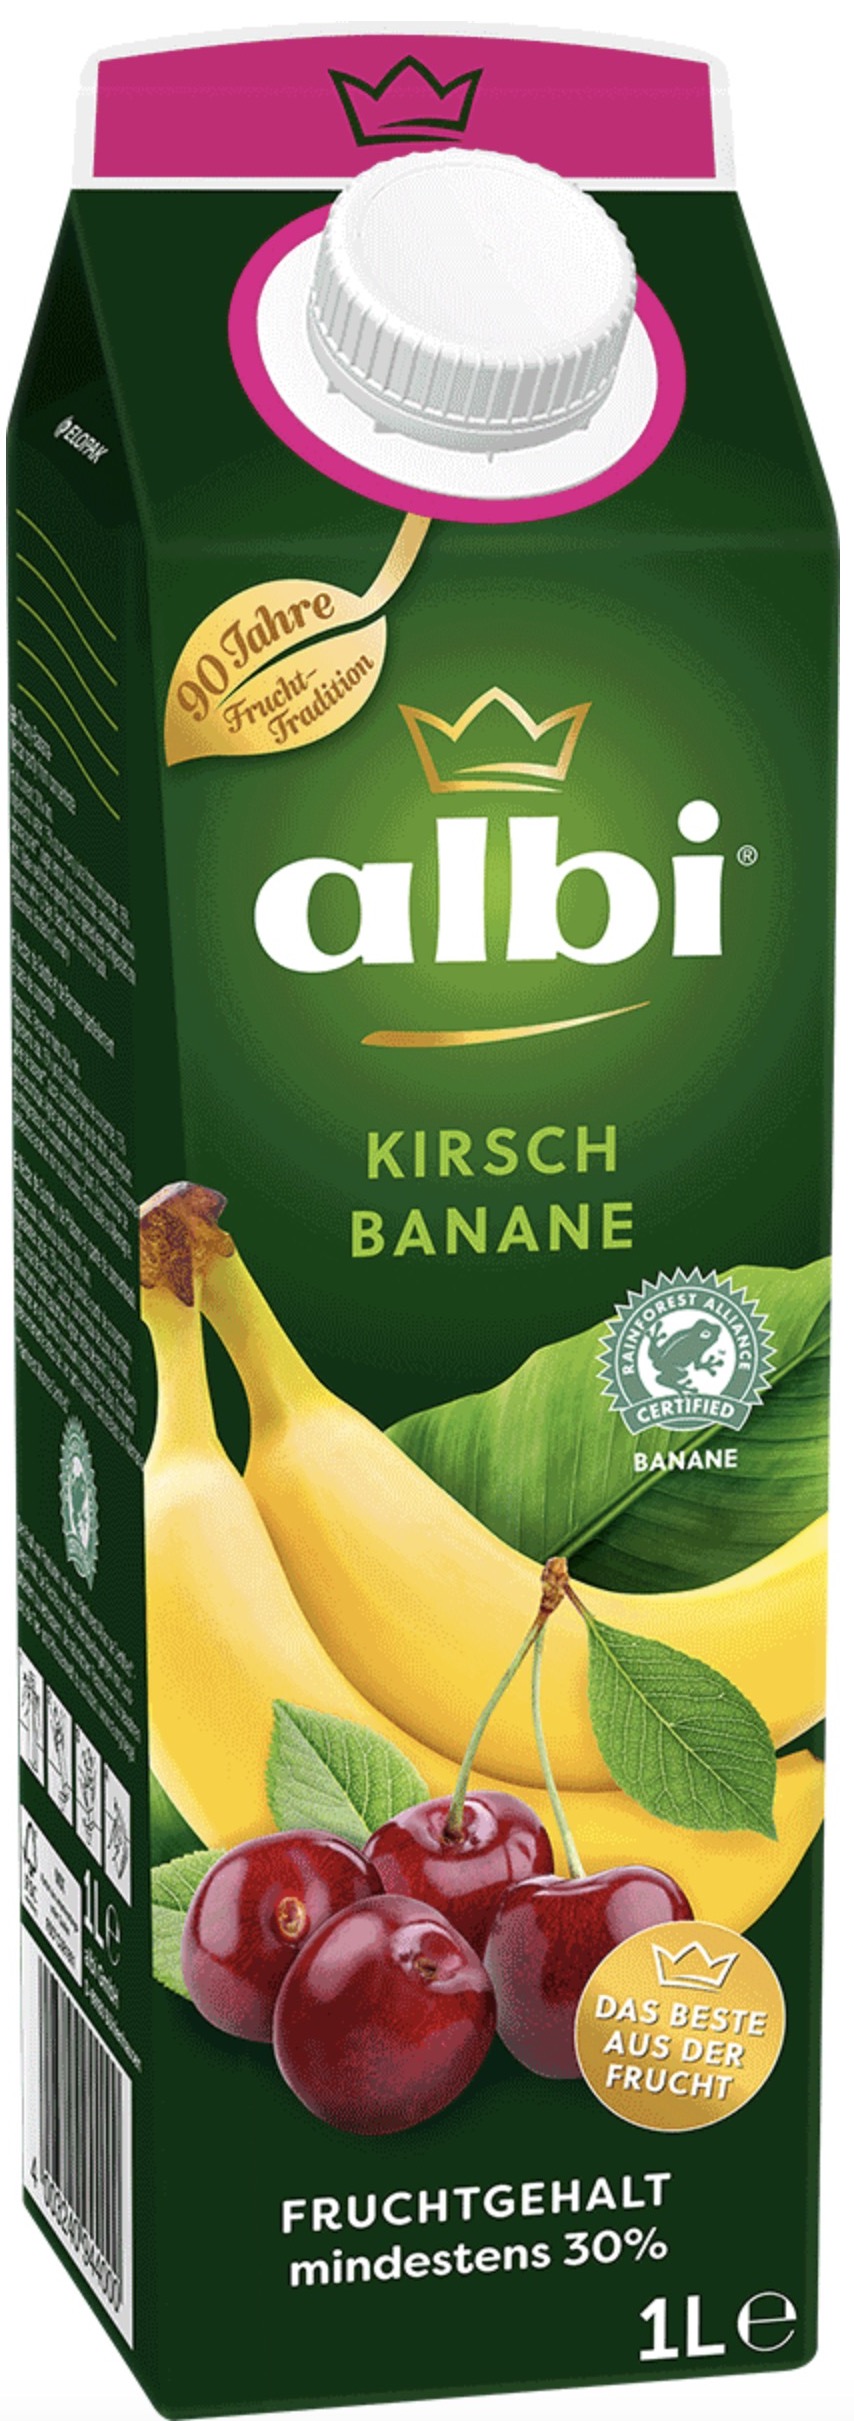 albi Kirsch-Banane 1,0L